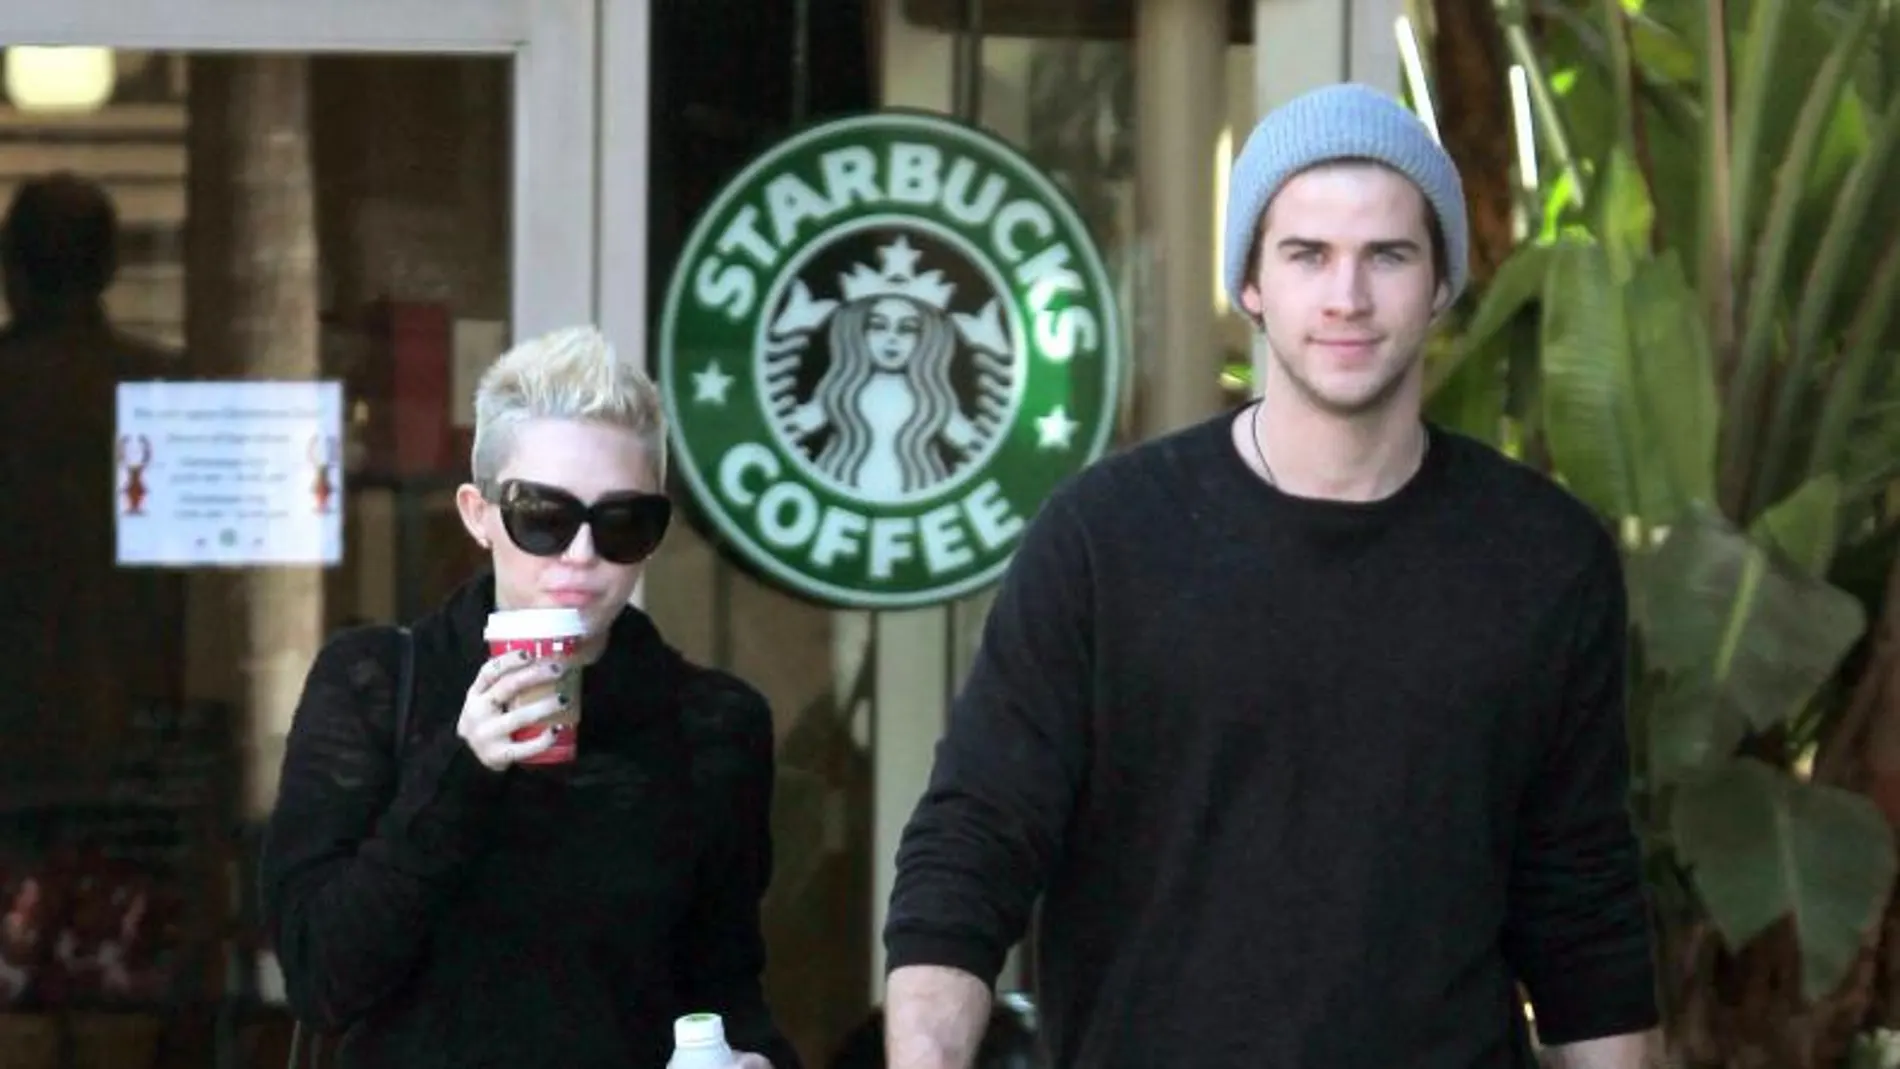 Miley Cyrus y Liam Hemsworth